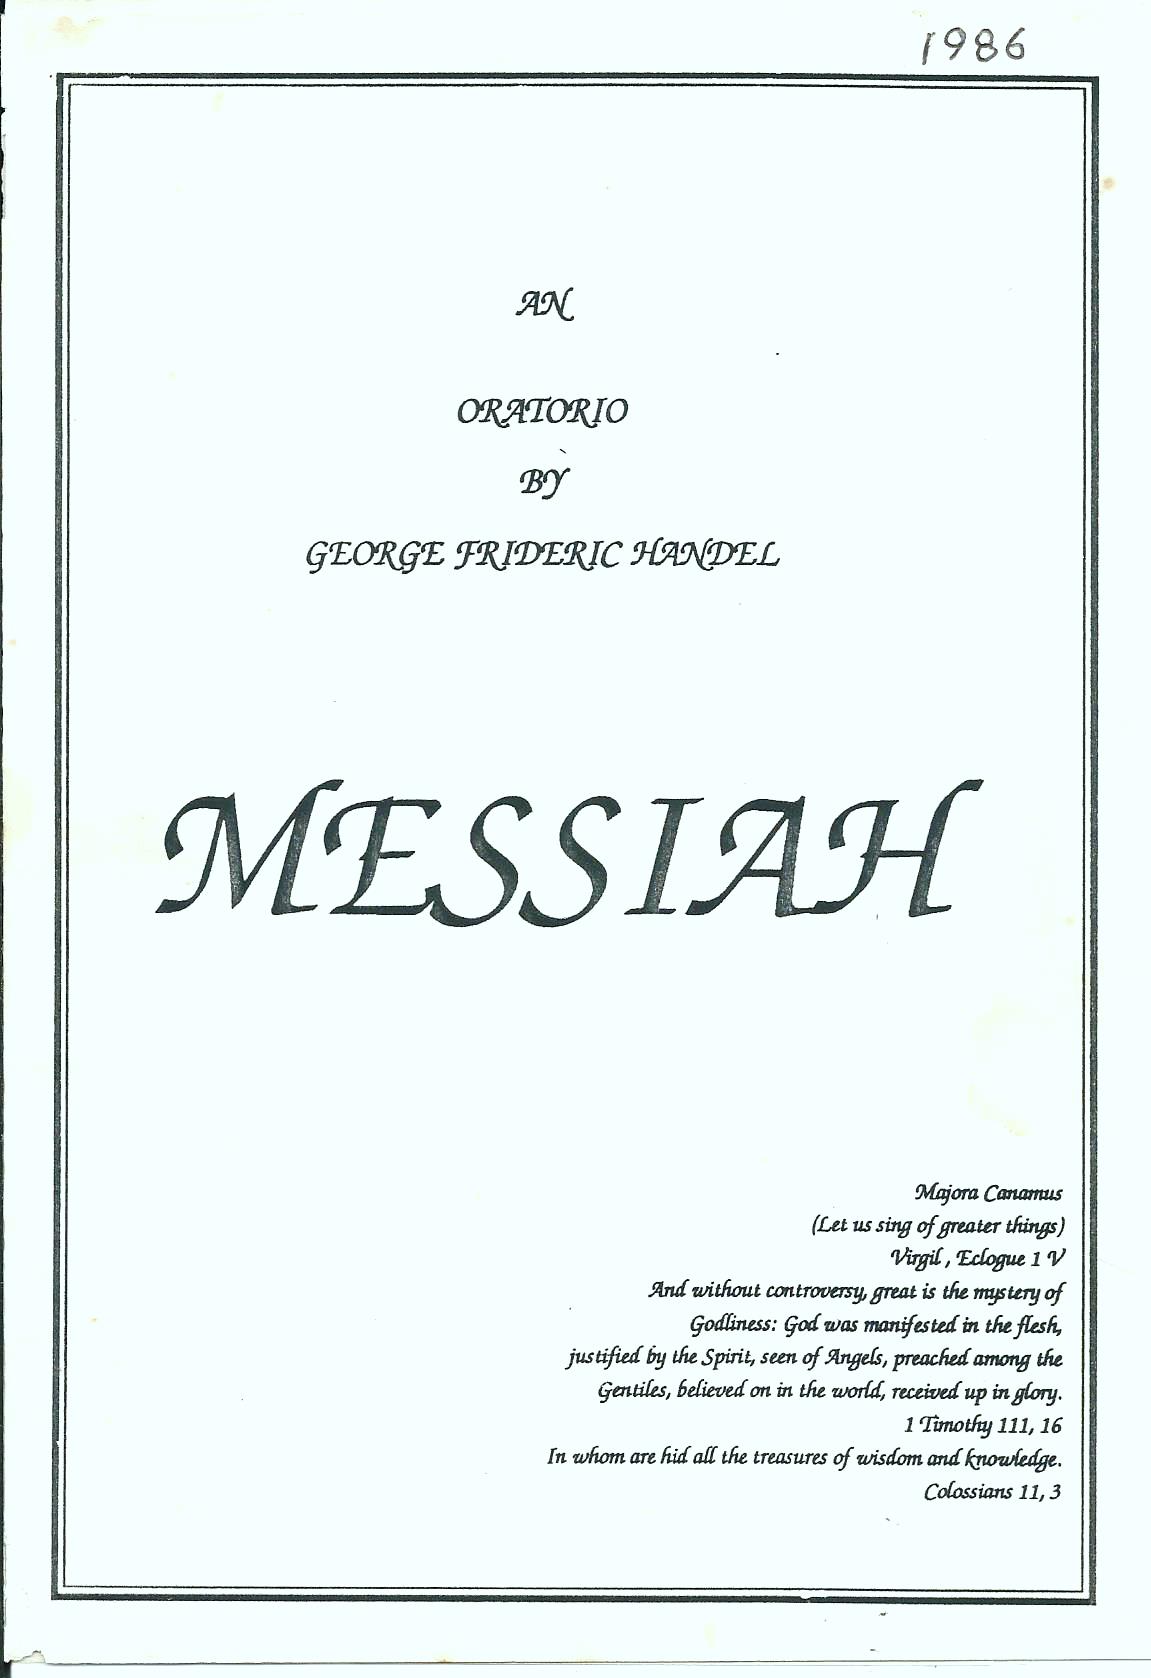 Messiah 1986